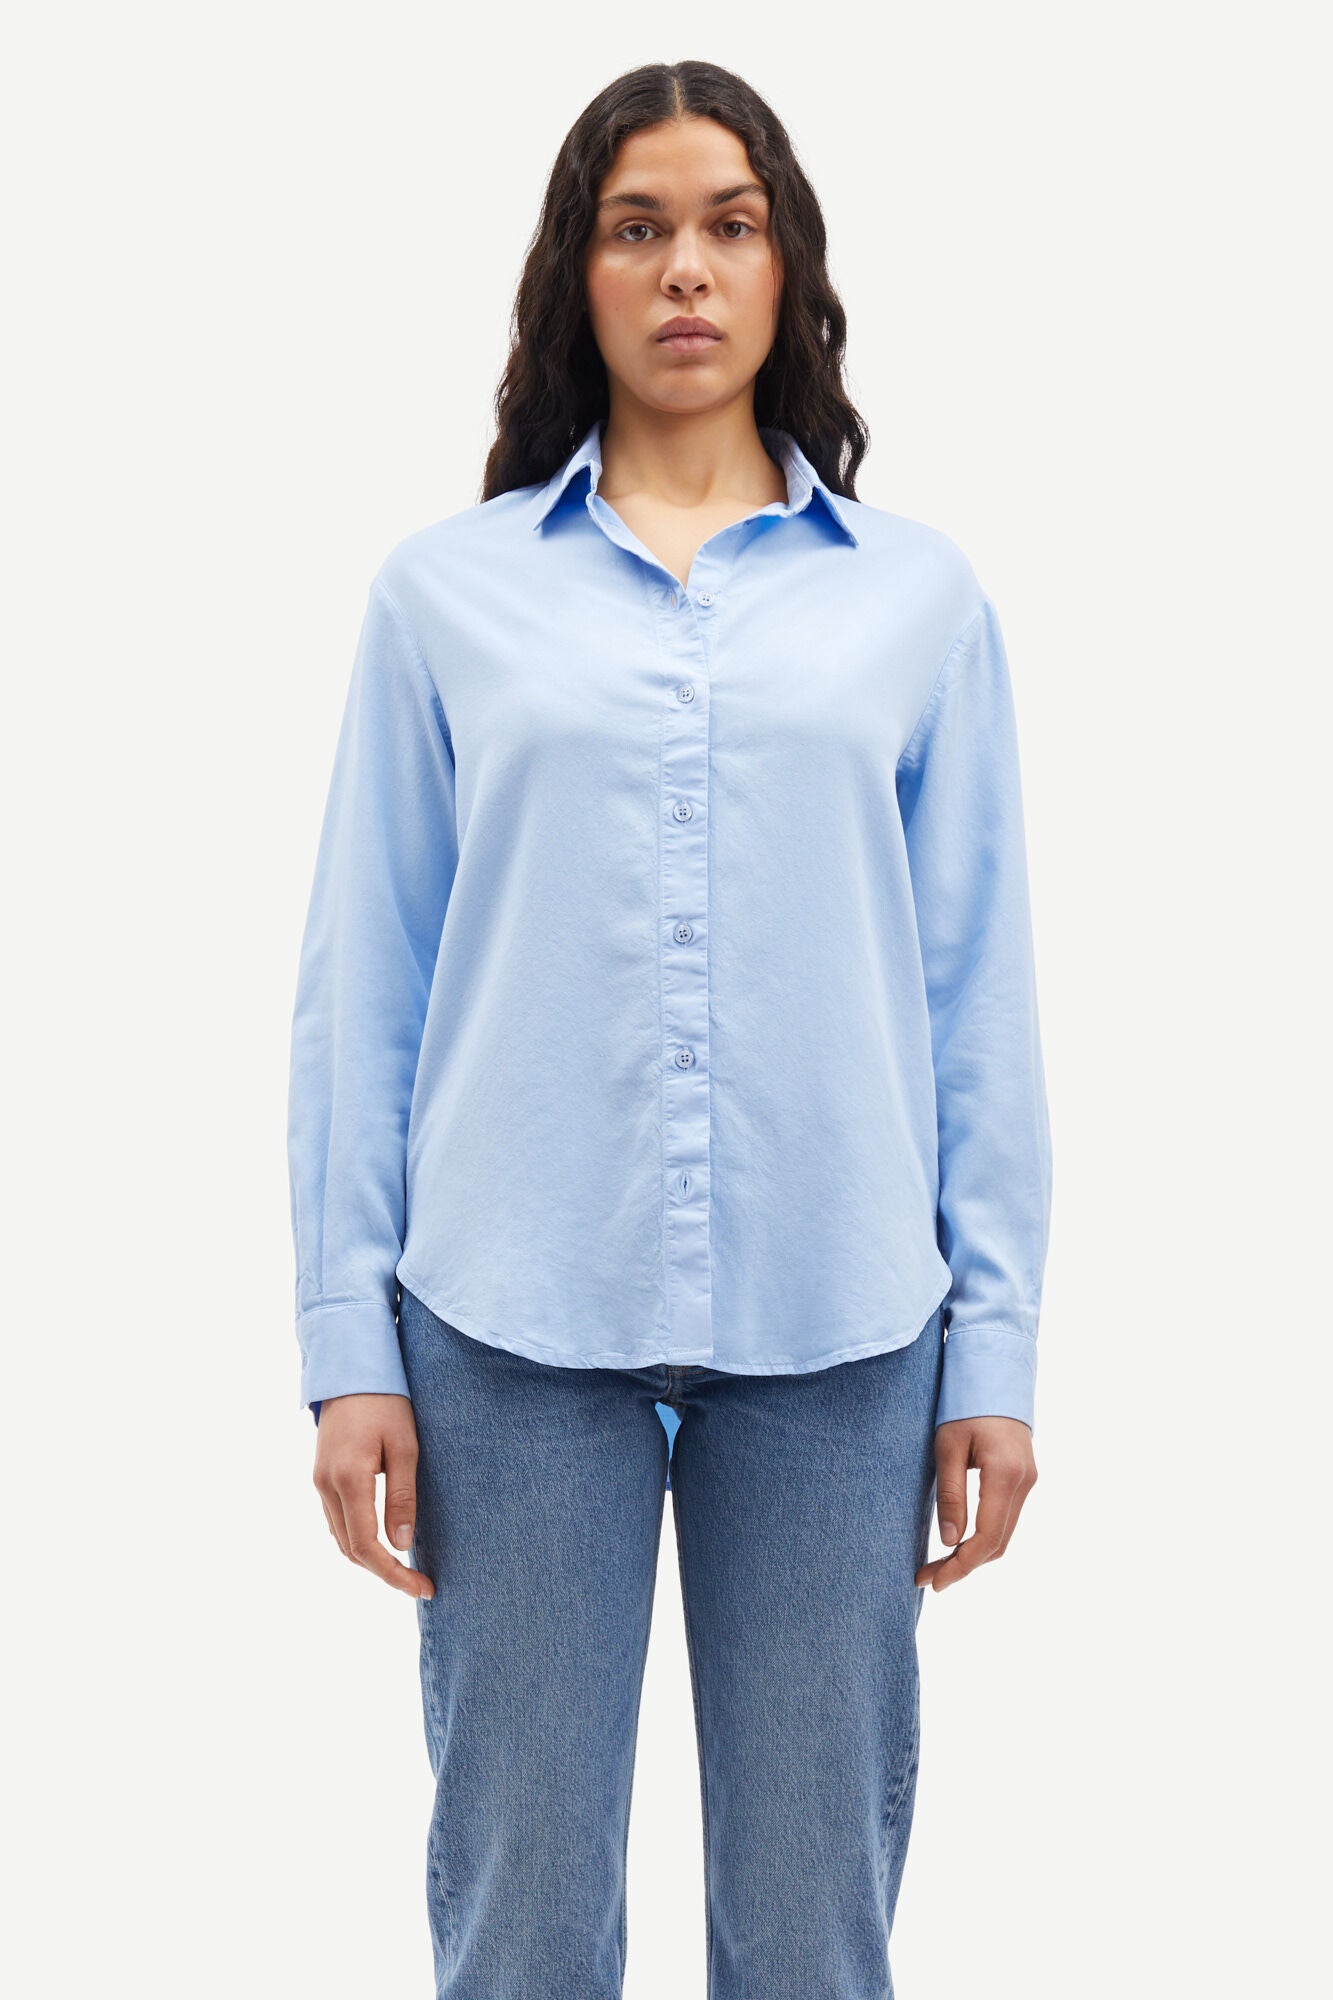 Madisoni shirt in serenity blue